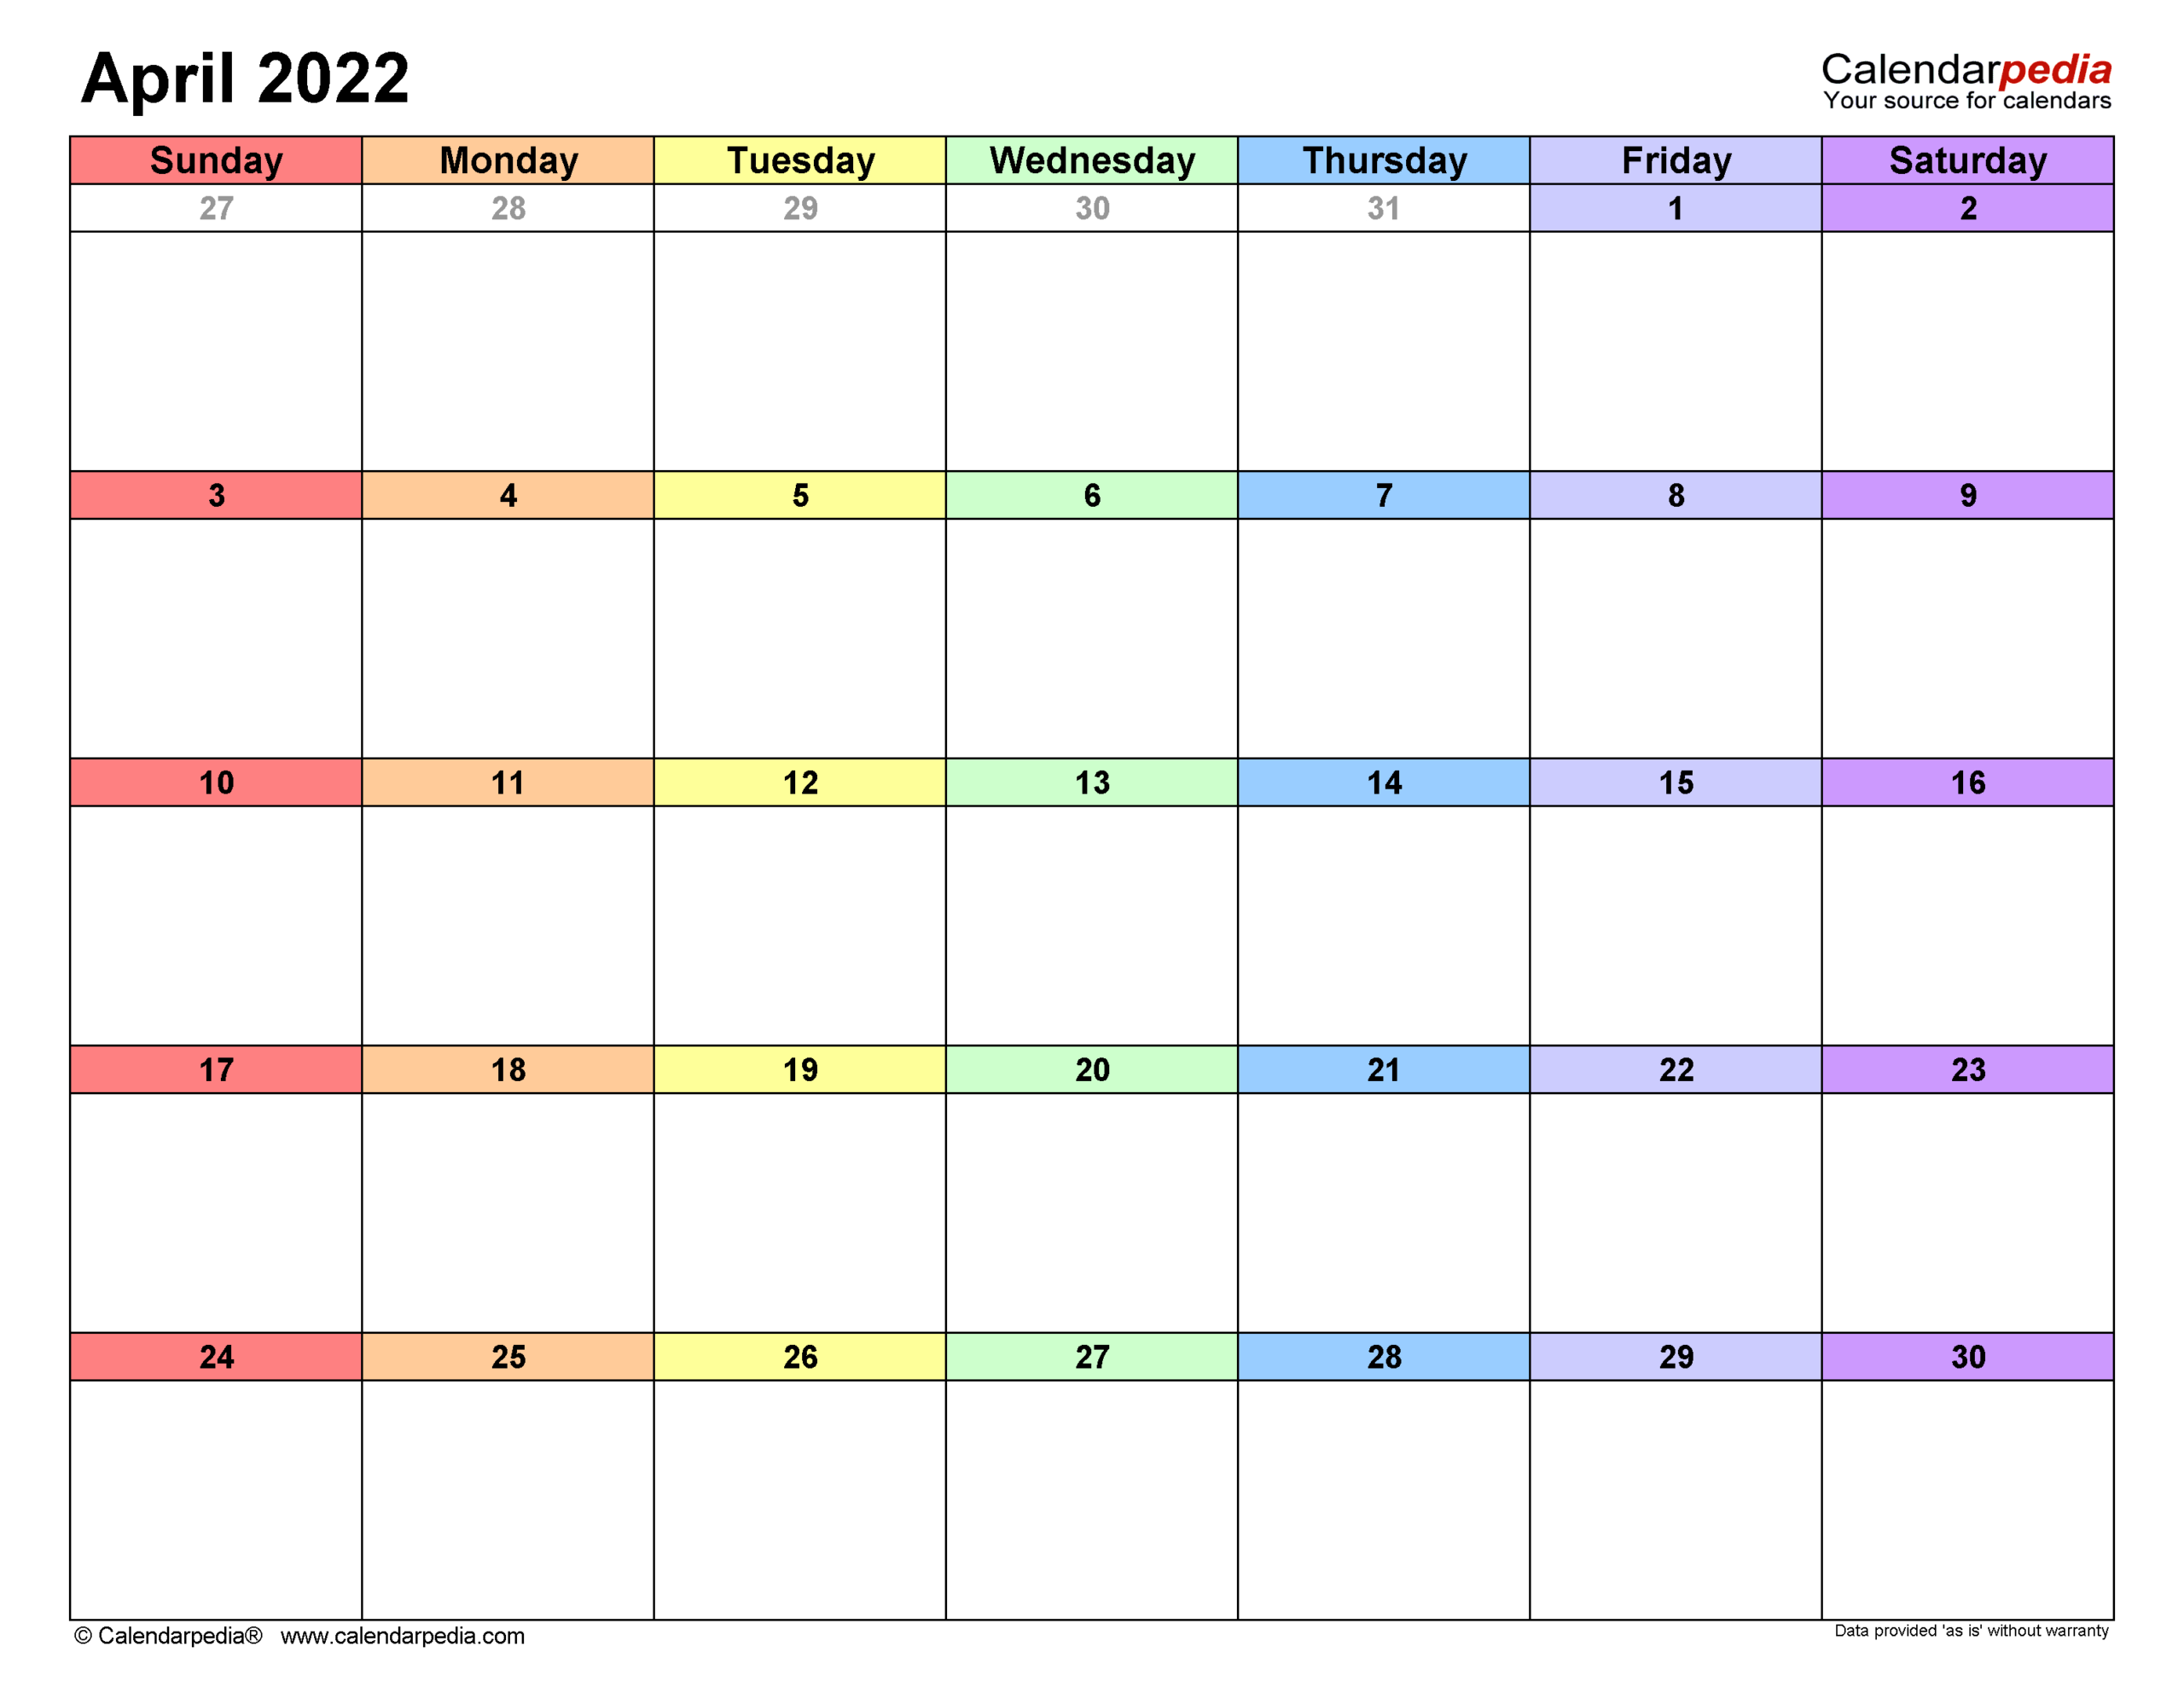 April 2022 Calendar | Templates For Word, Excel And Pdf  April Calendar For 2022